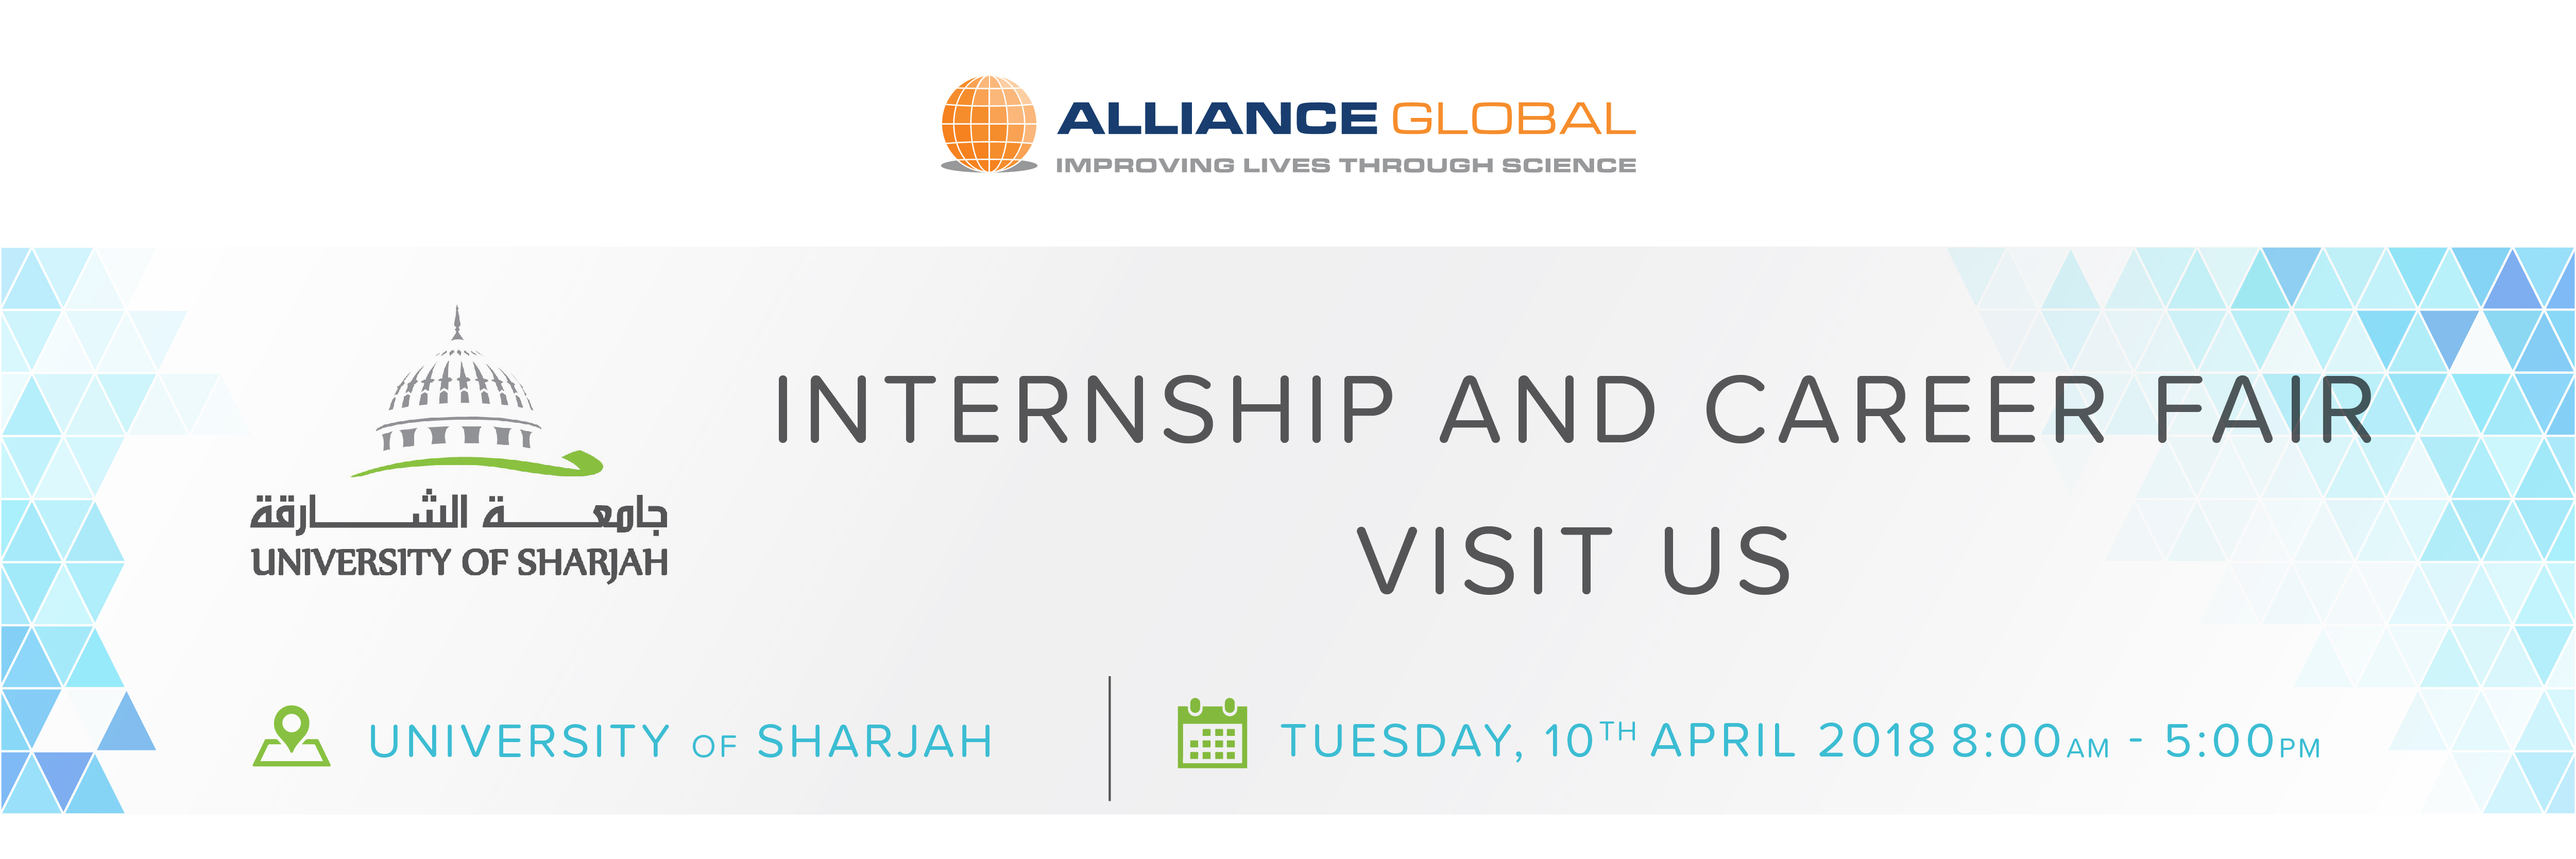 Internship and Career Fair - University of Sharjah